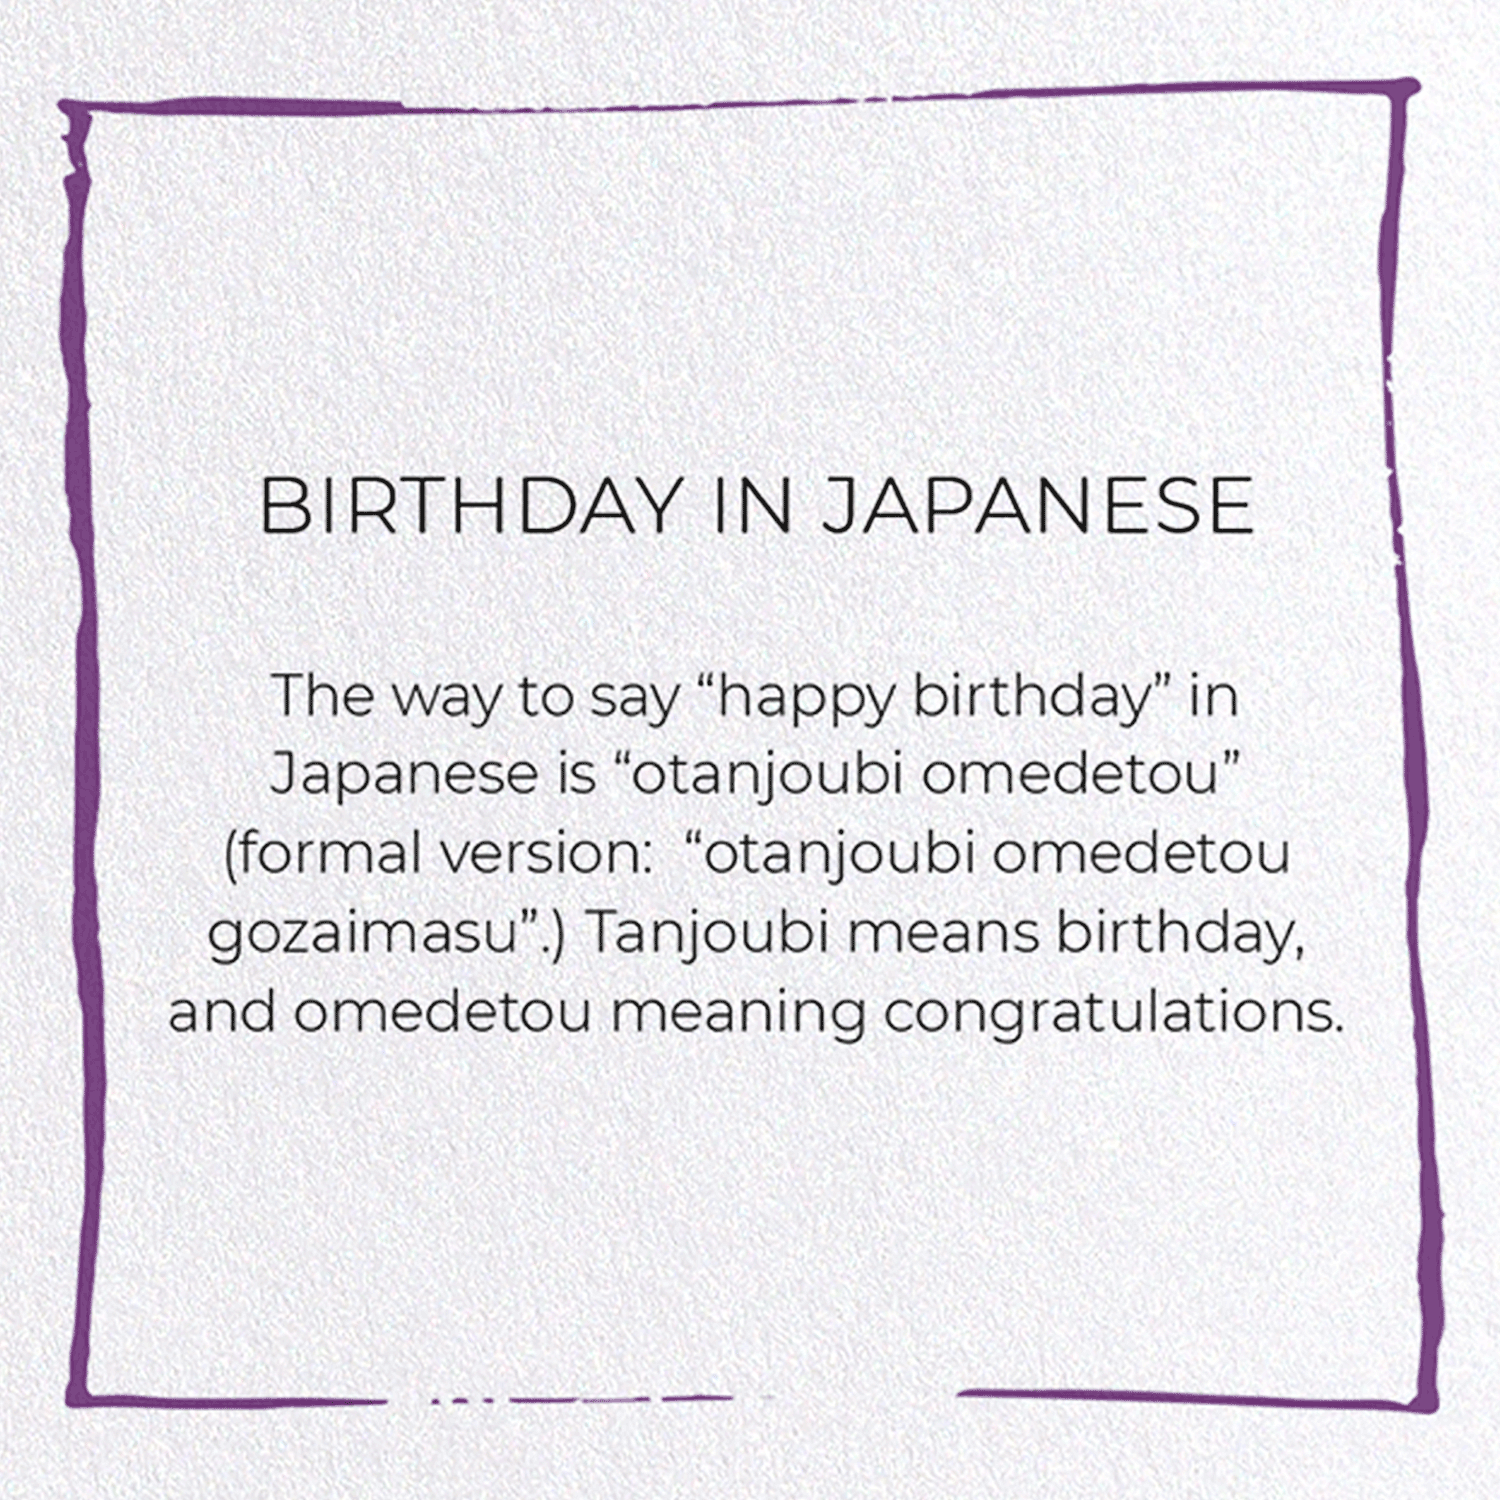 BIRTHDAY IN JAPANESE